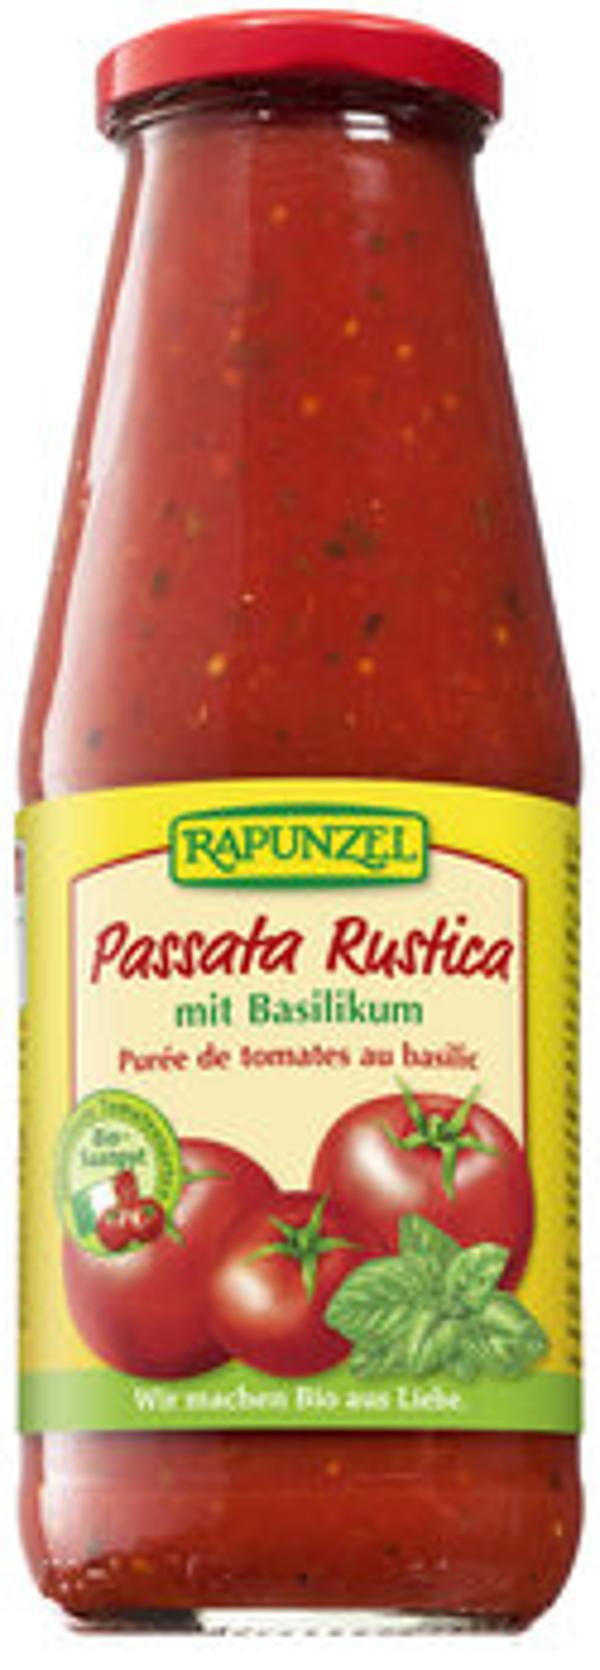 Produktfoto zu Passata Rustica mit Basilikum, 680g